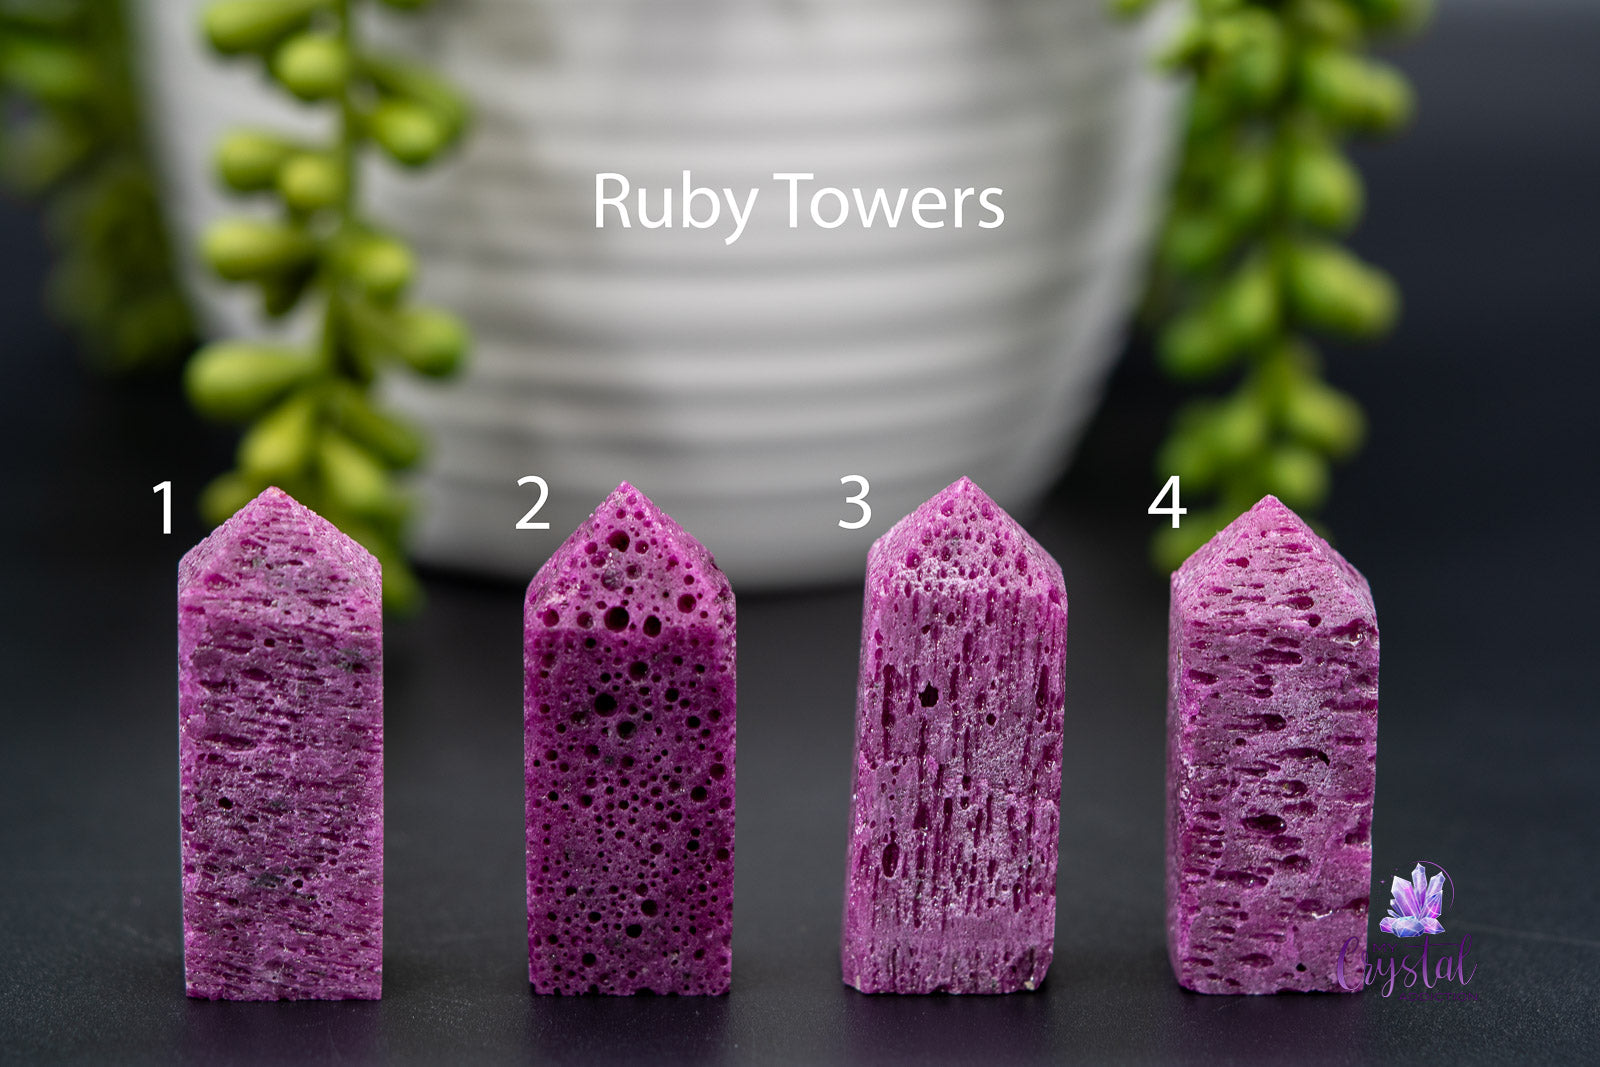 Ruby Tower 1.8"-1.9"/46mm-49mm - My Crystal Addiction